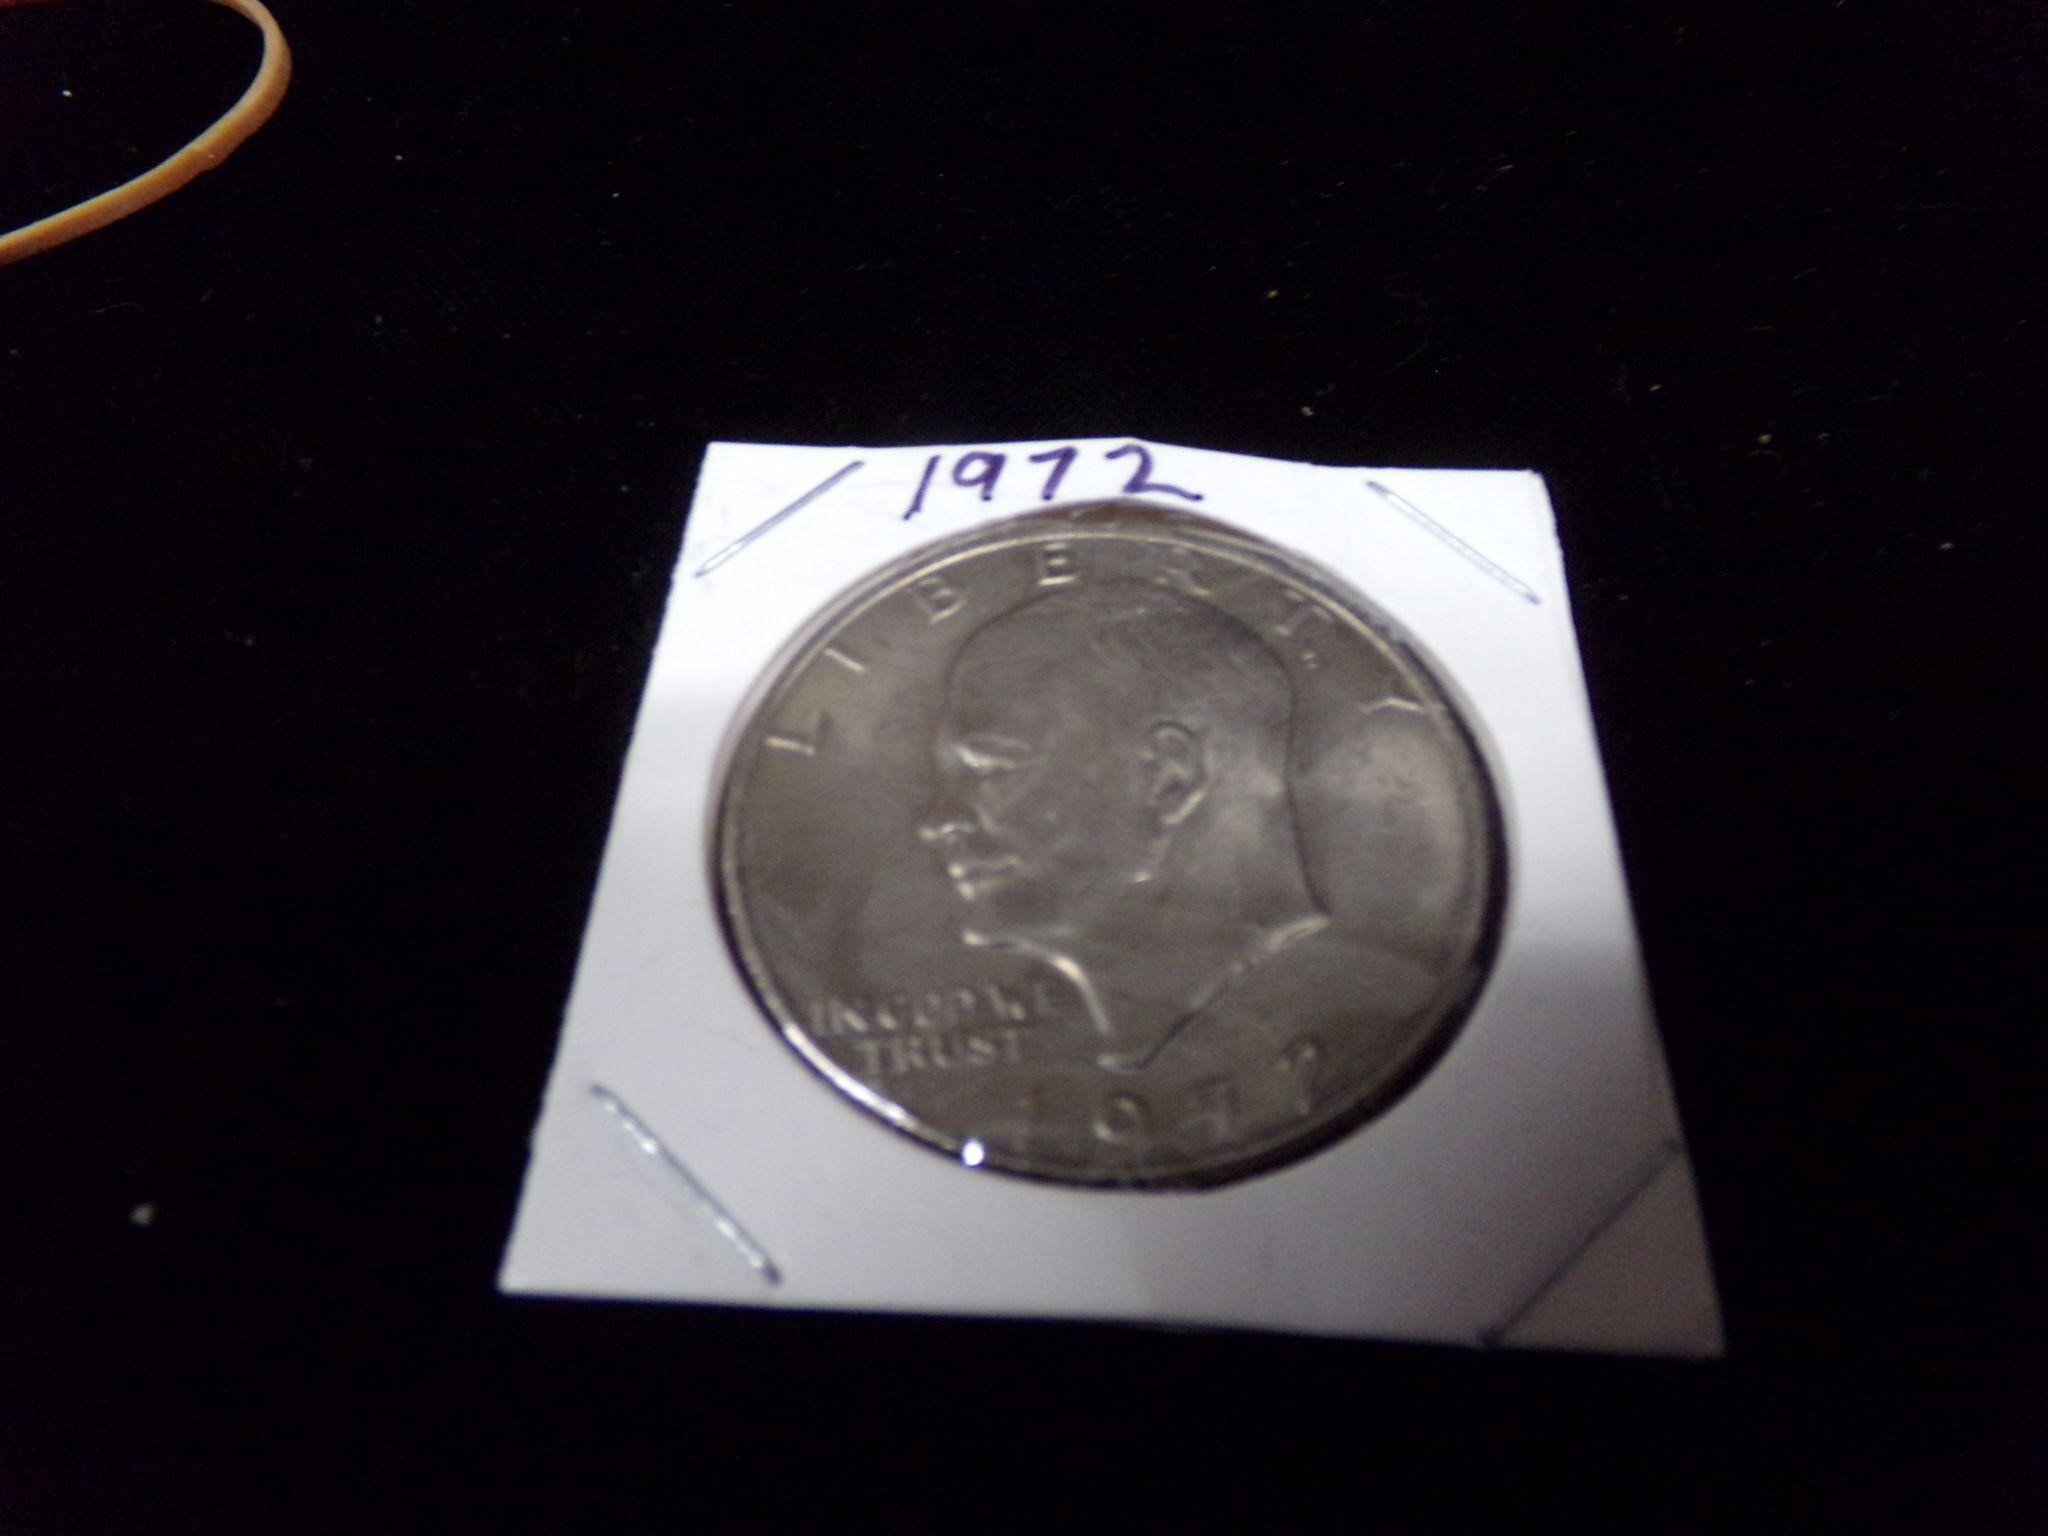 1 - 1972 silver dollar